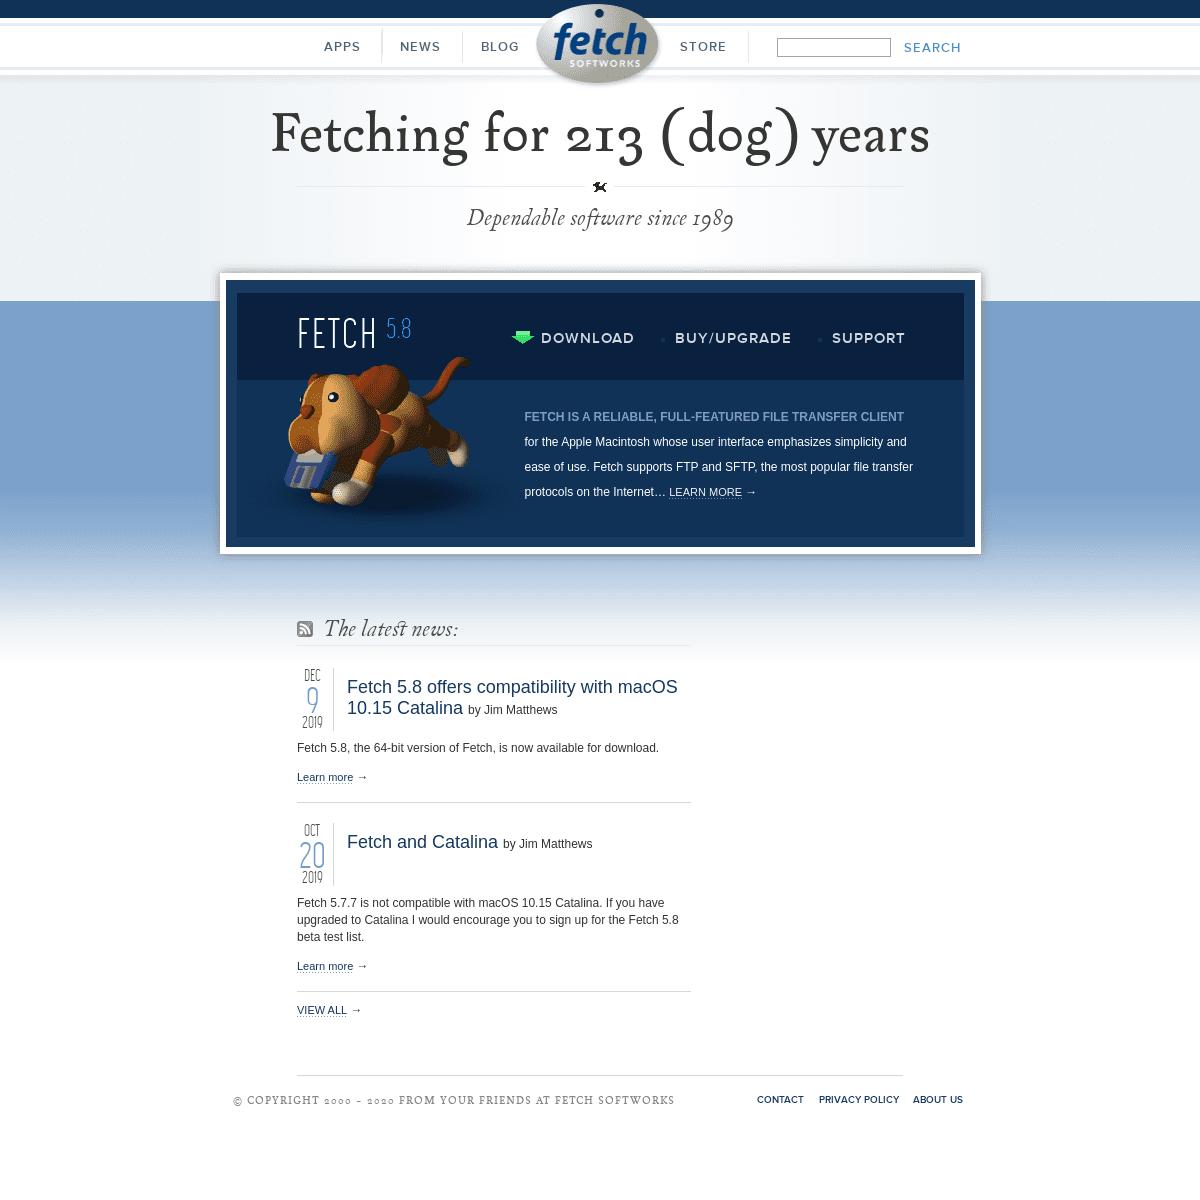 A complete backup of fetchsoftworks.com